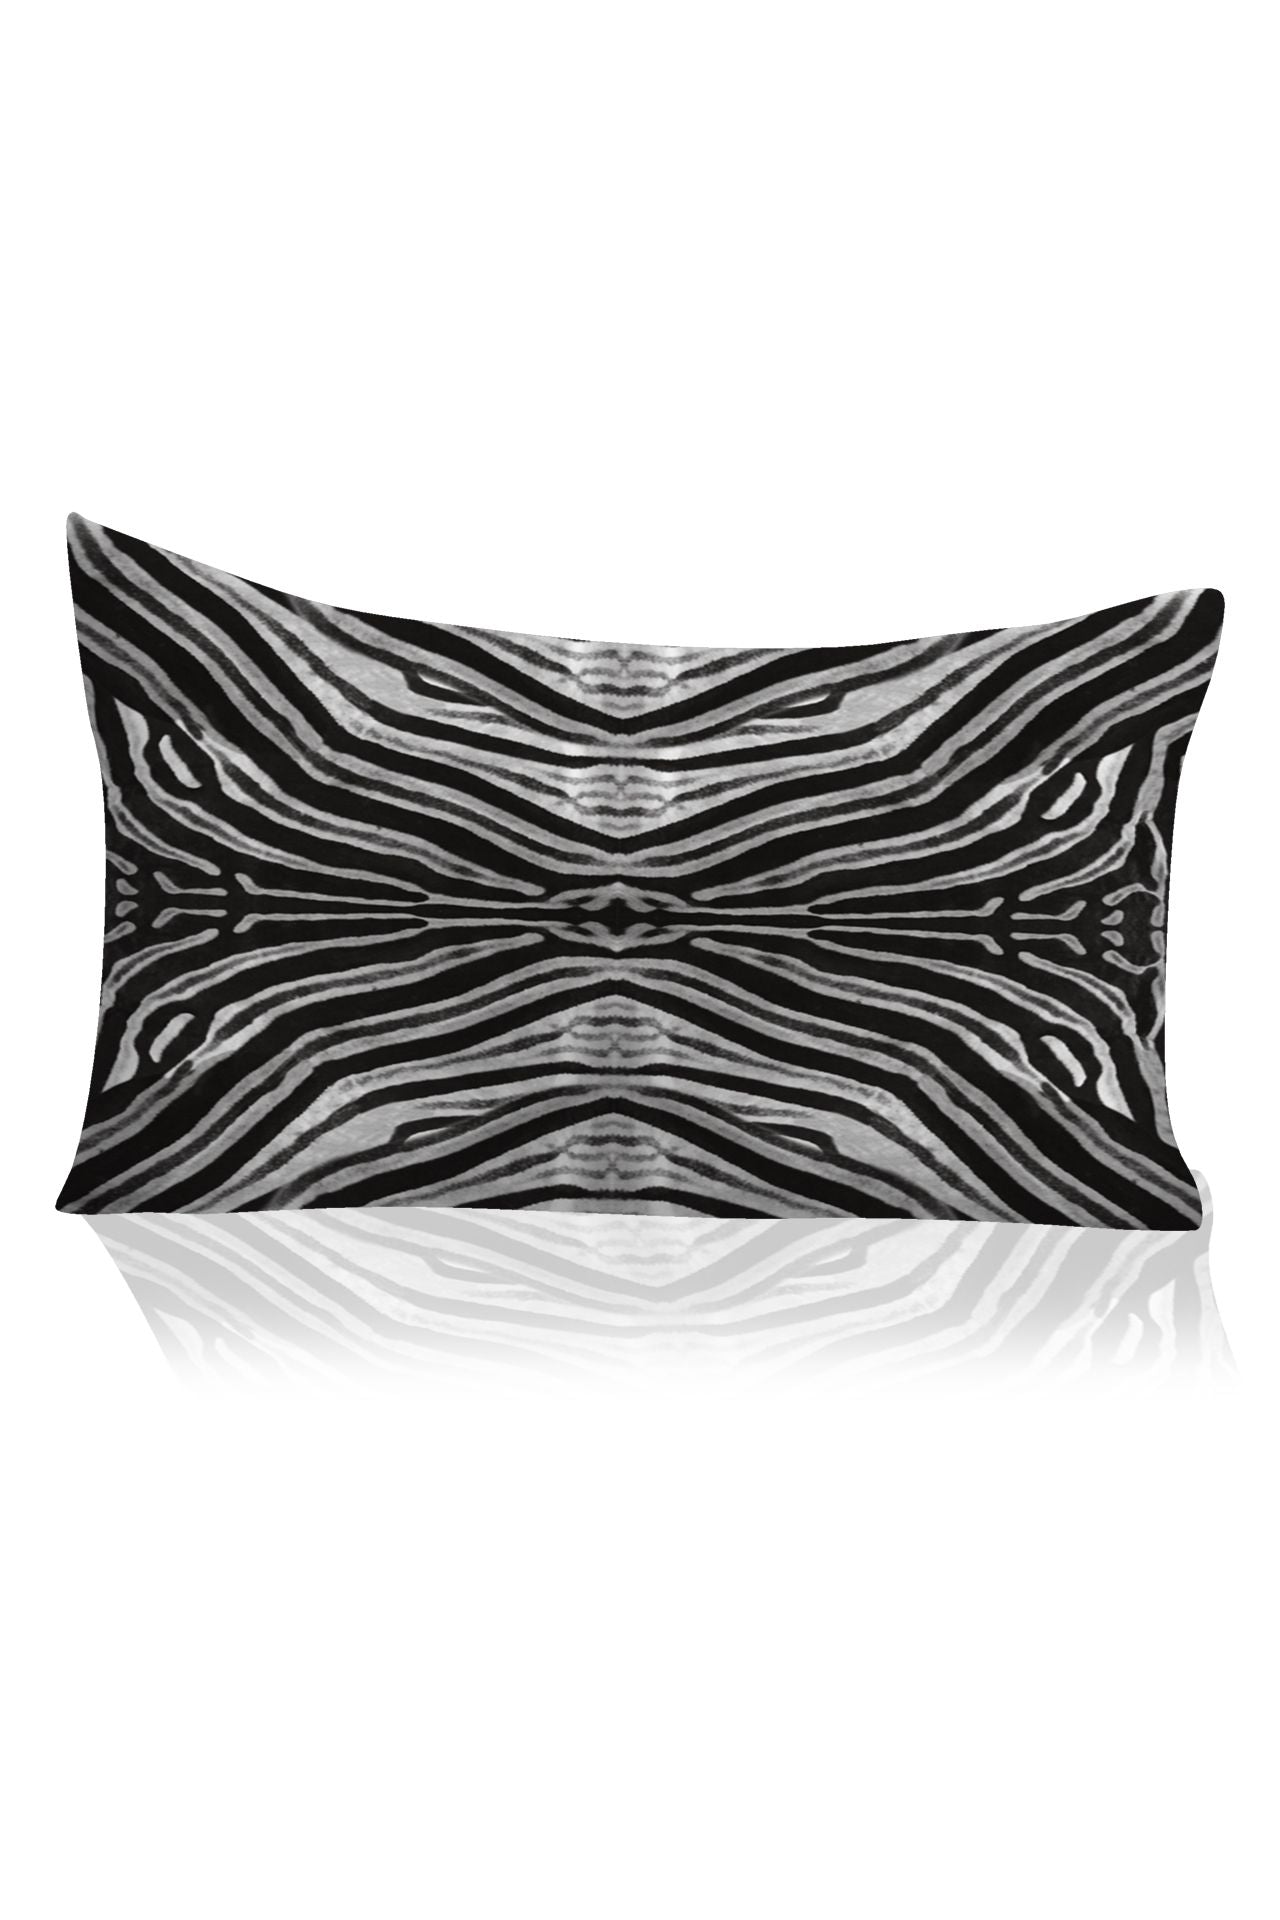 "zebra print throw pillows" "designer pillows" "decorative pillow case" "Kyle X Shahida"